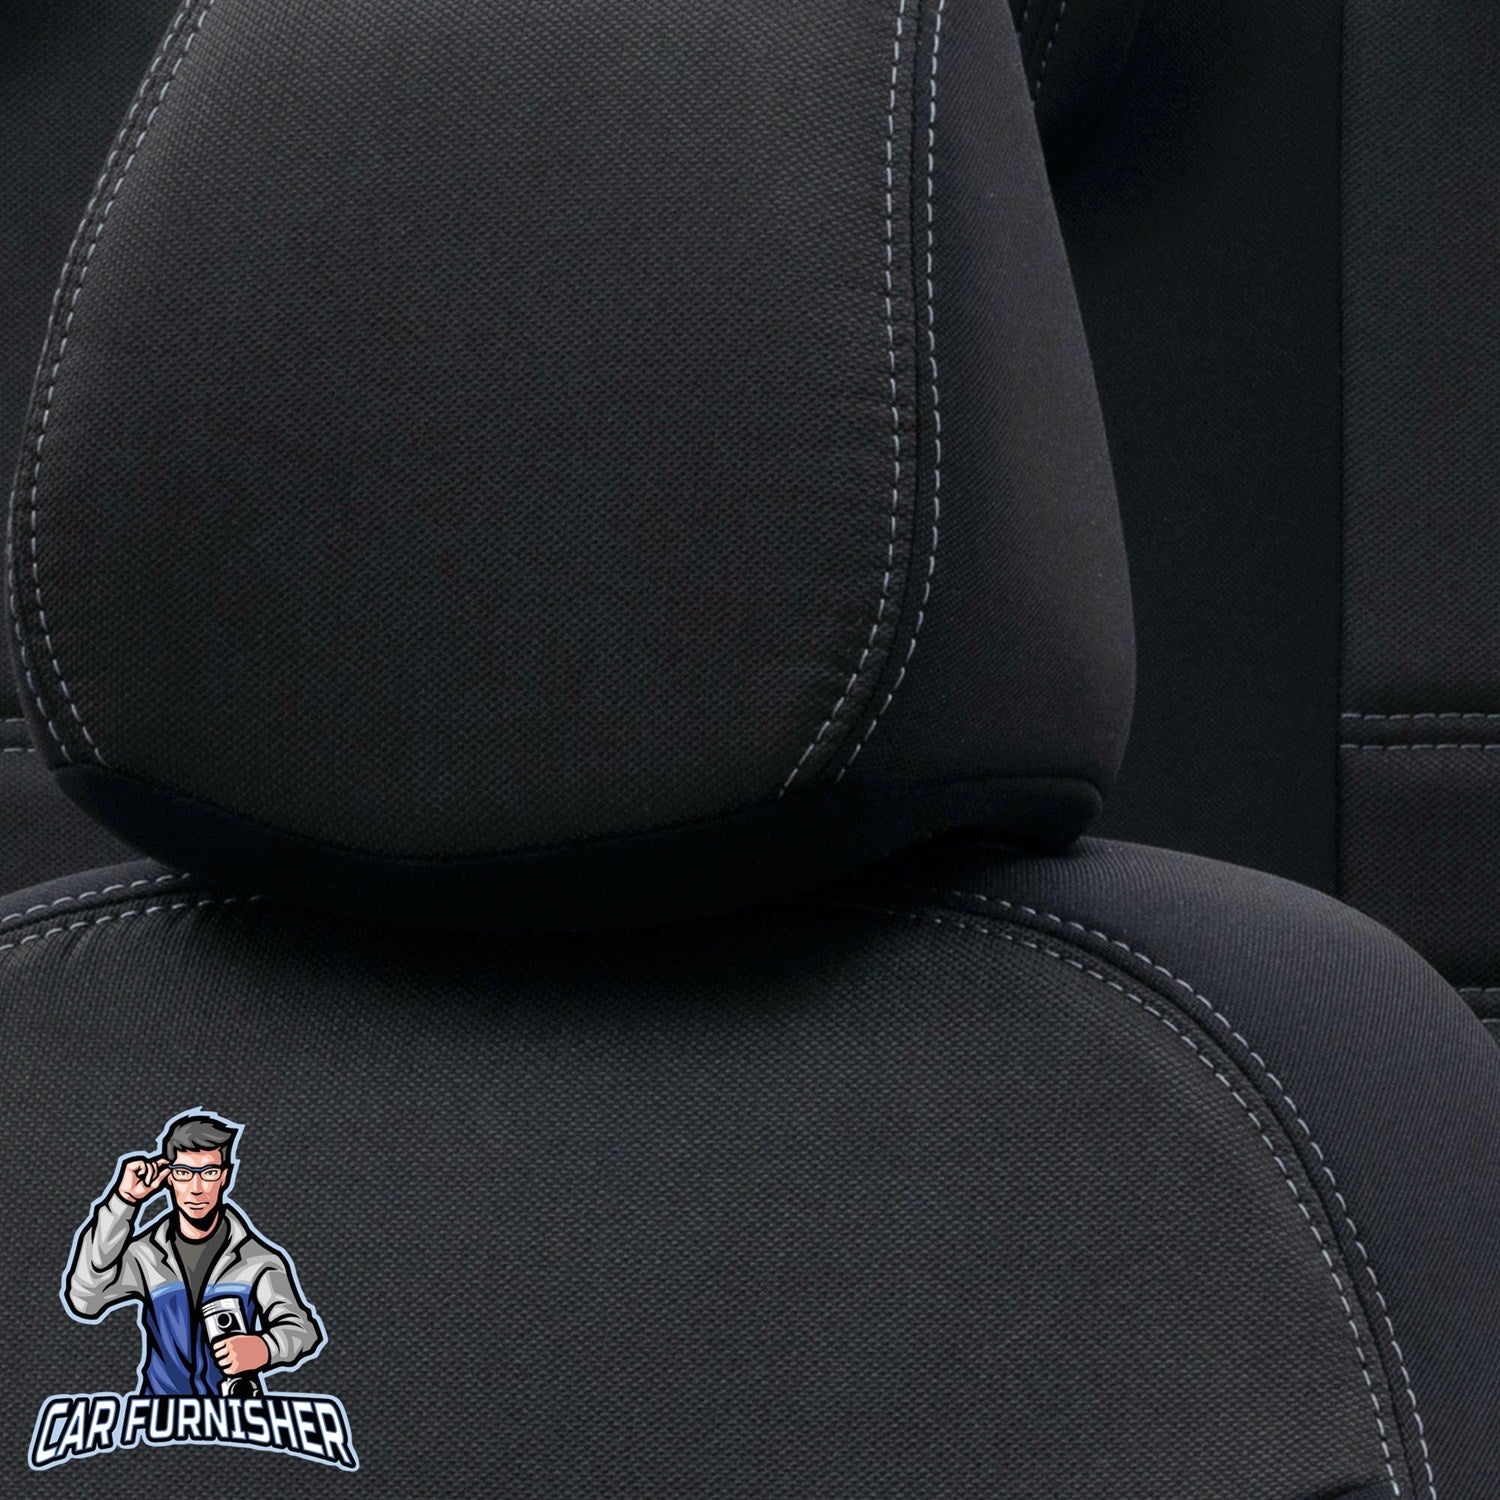 Mercedes X-Class Seat Covers Original Jacquard Design Black Jacquard Fabric